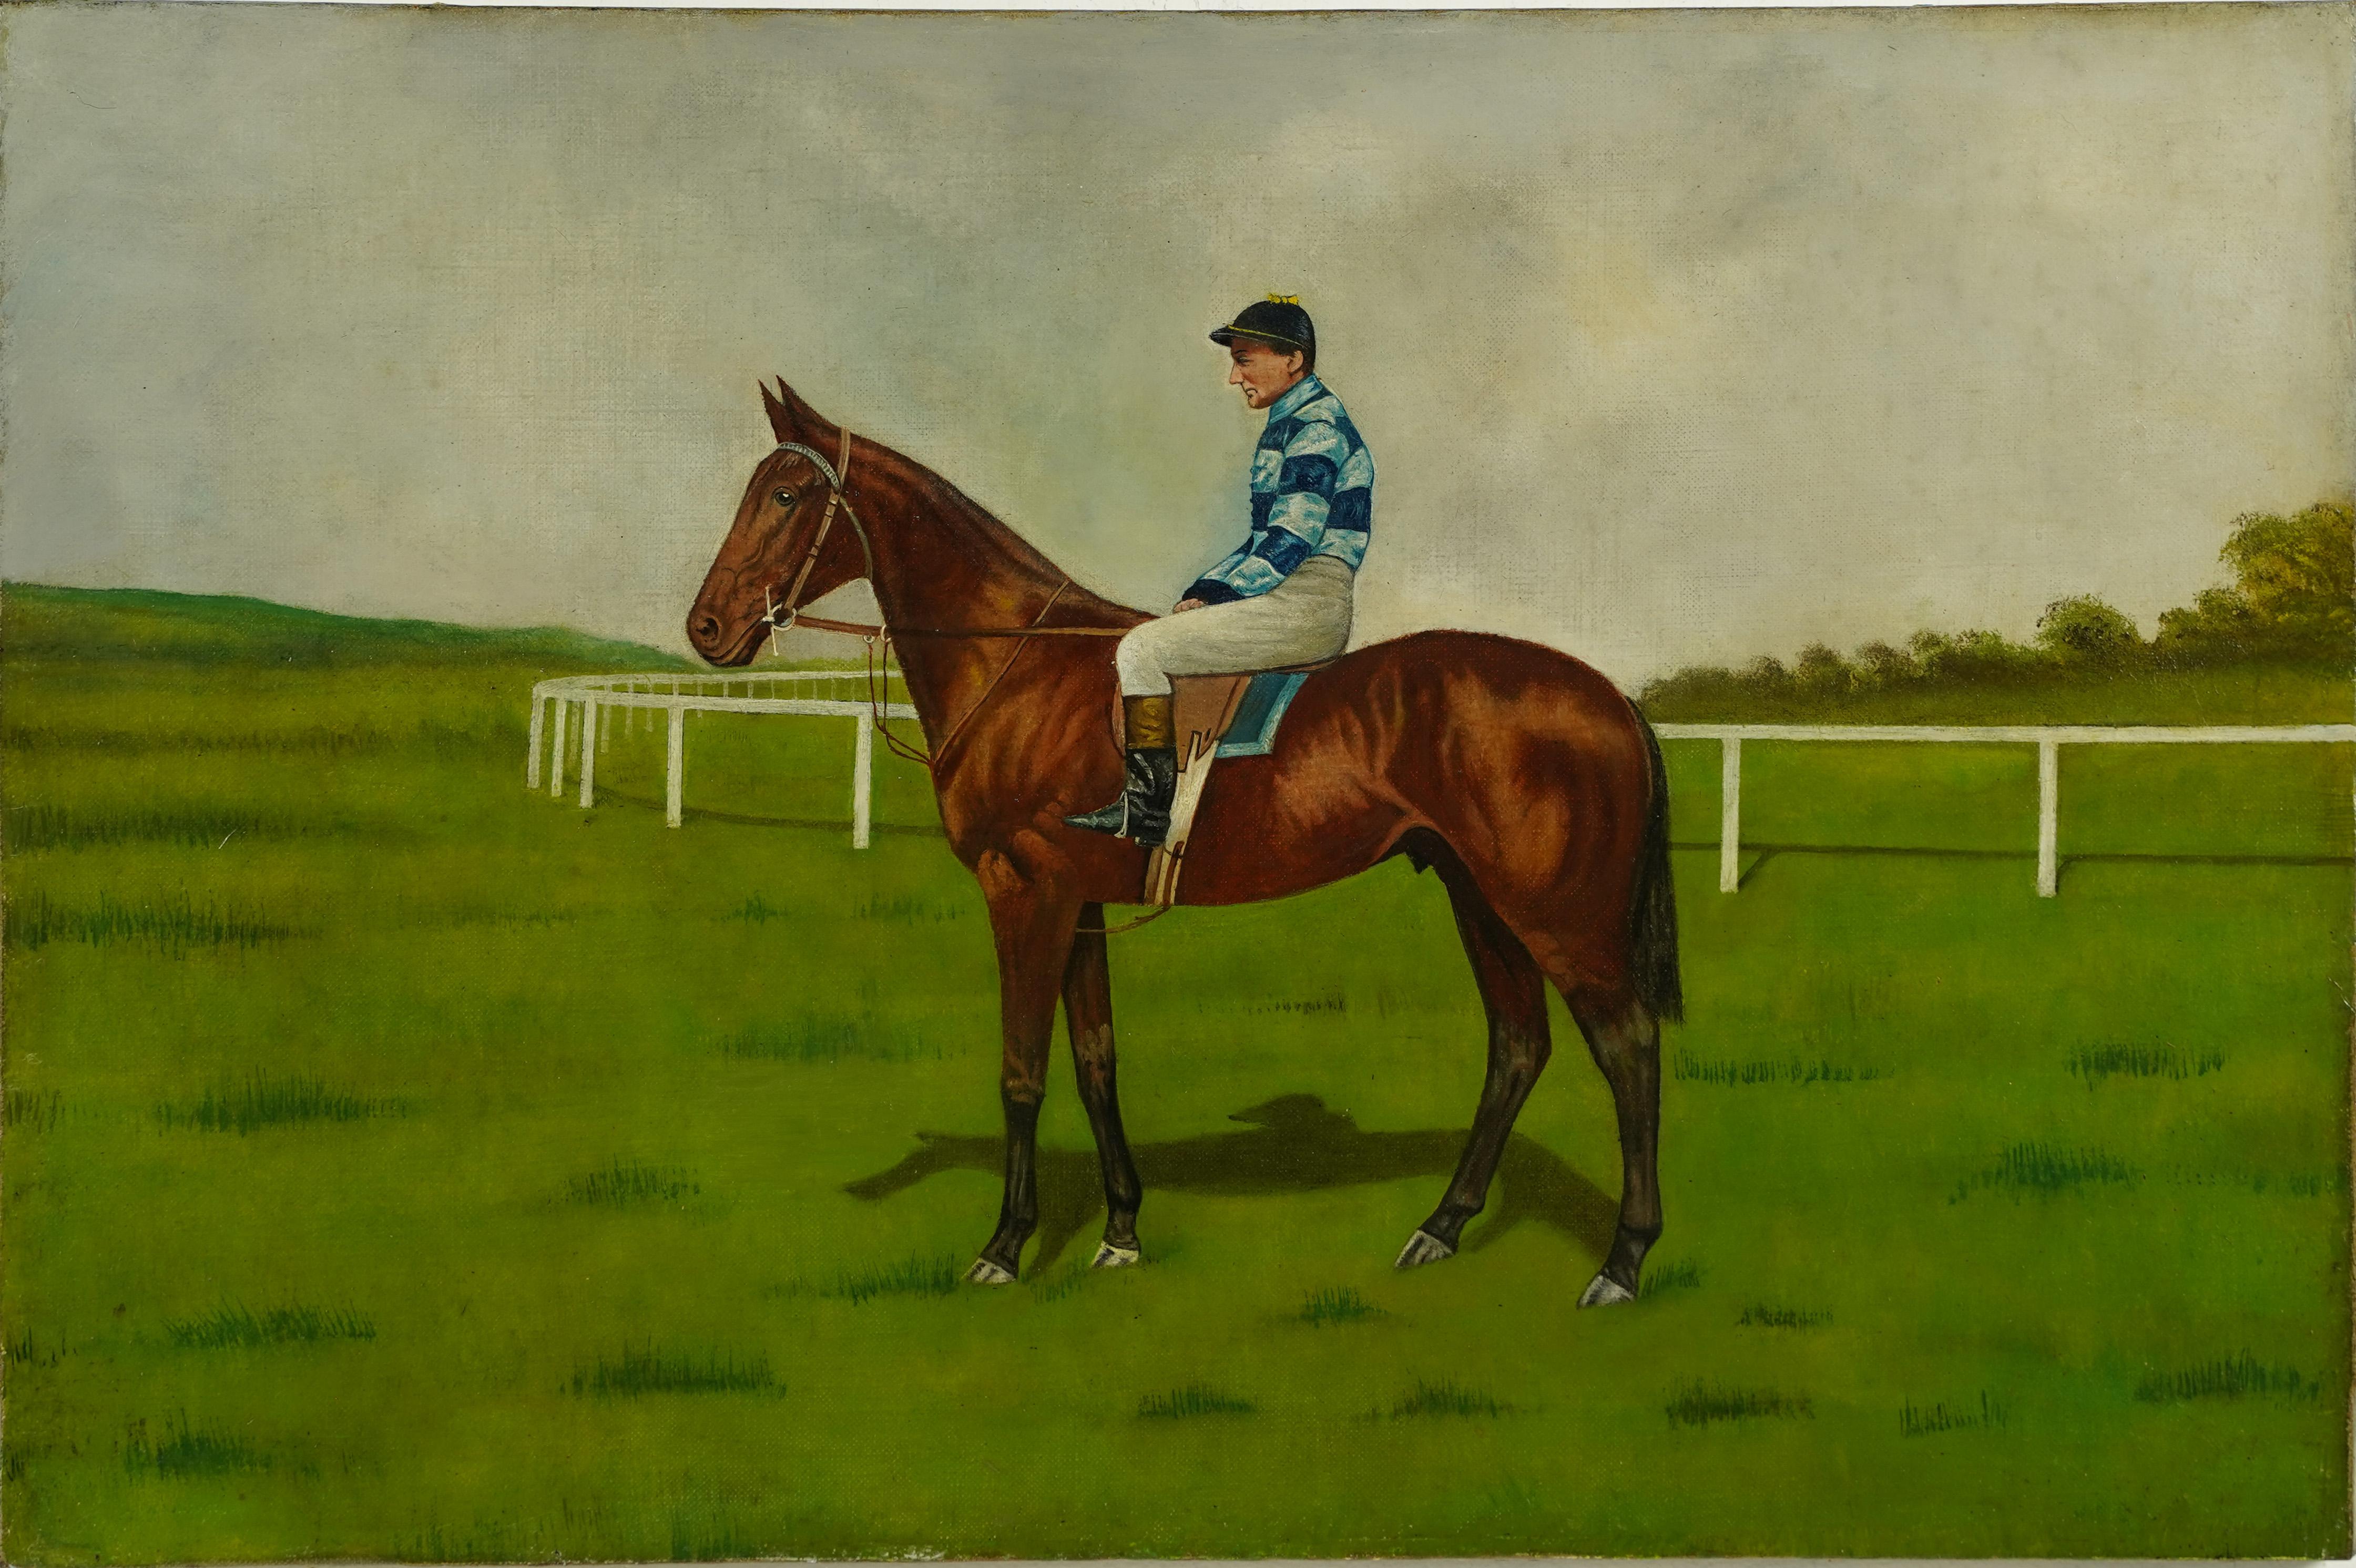 Unknown Animal Painting - Antique American School Horse Race Portrait Equine Landscape Oil Painting